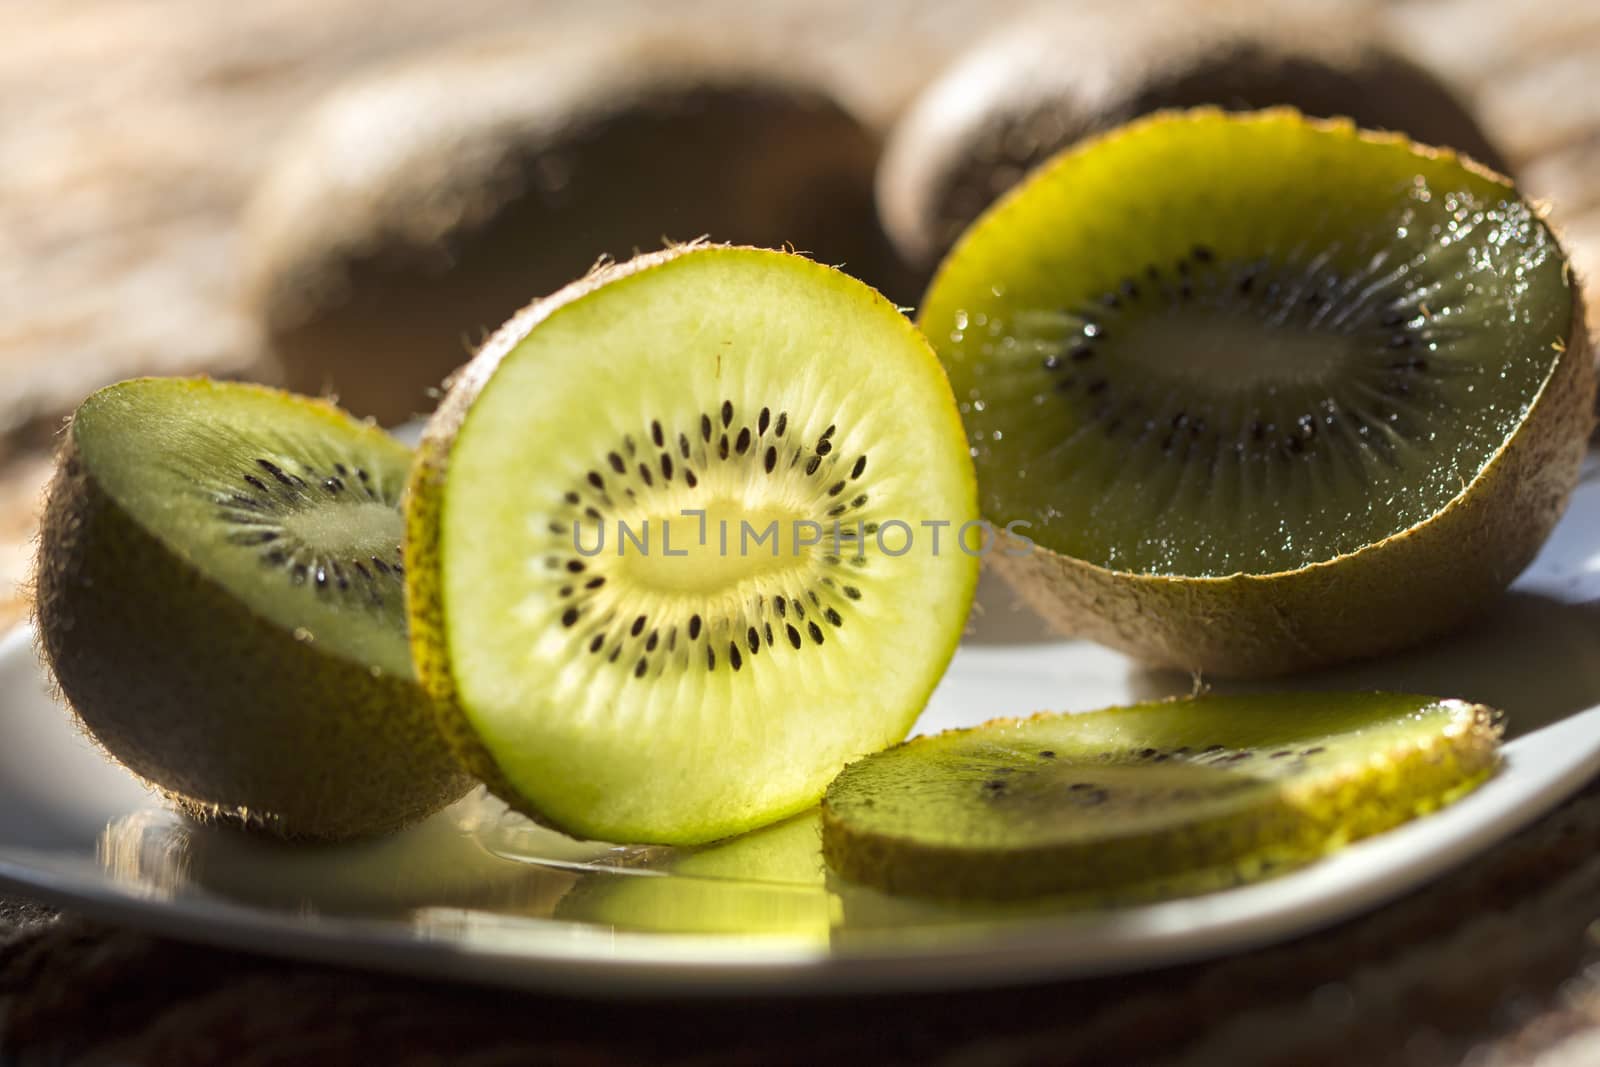 juicy kiwi halves and slices on a plate